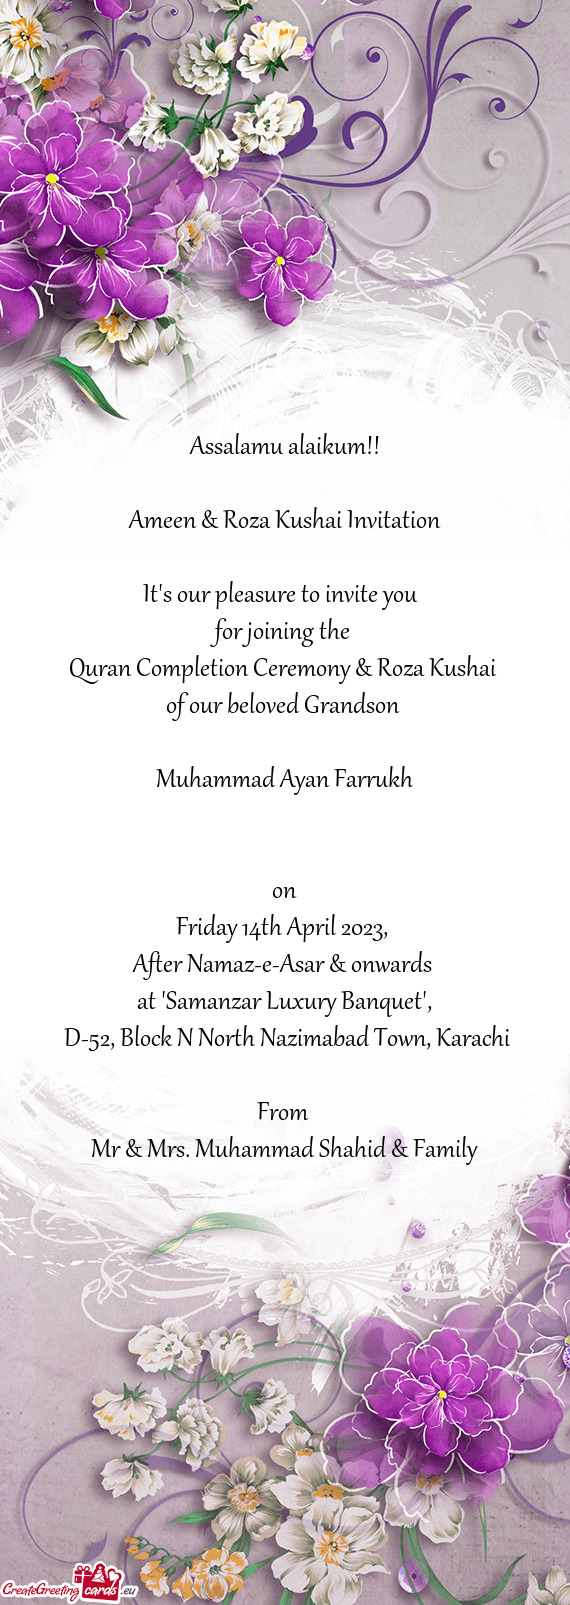 Ameen & Roza Kushai Invitation